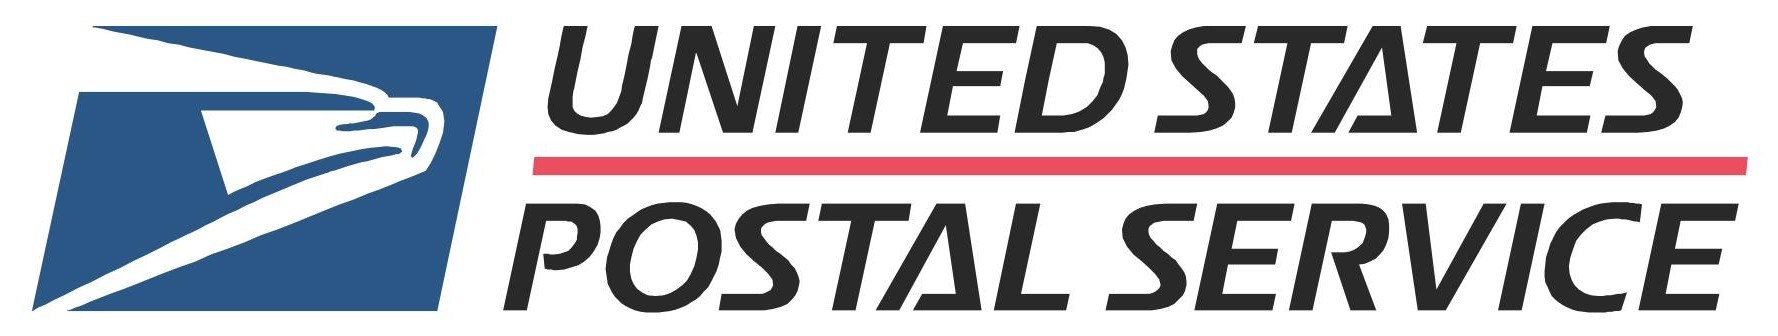 USPS United States Postal Service Logo